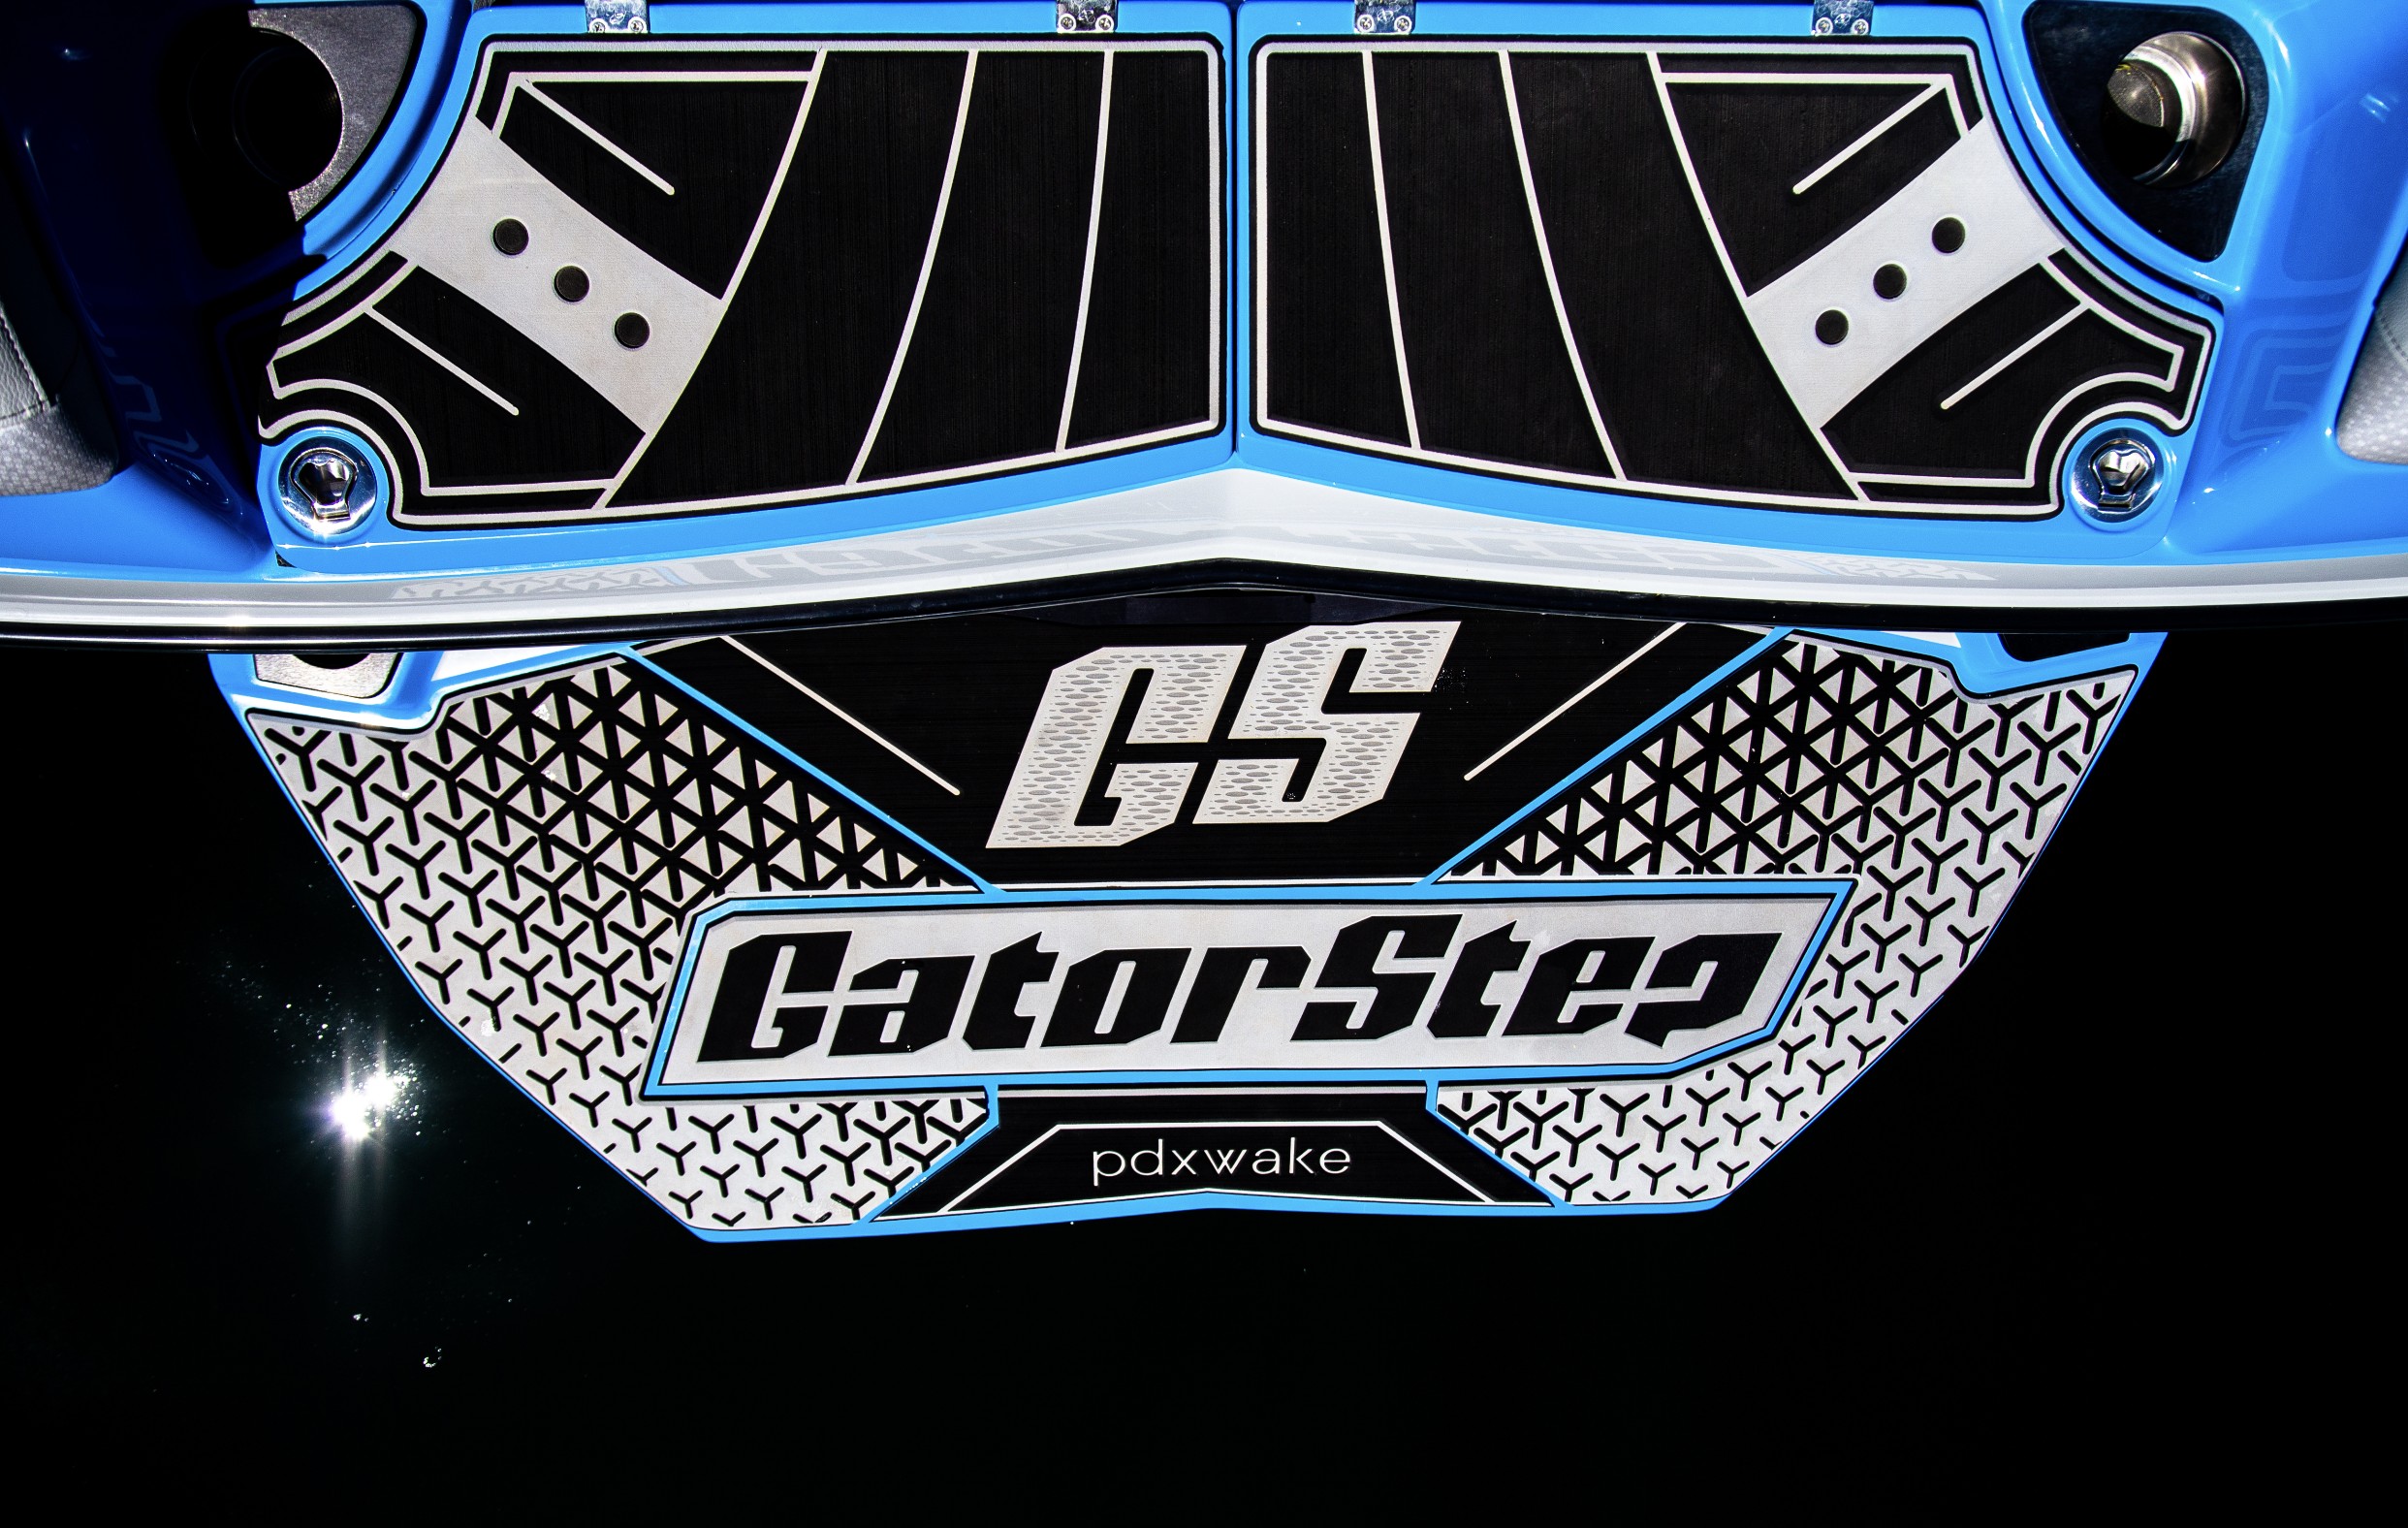 gatorstep boat flooring decking custom design black gray white blue